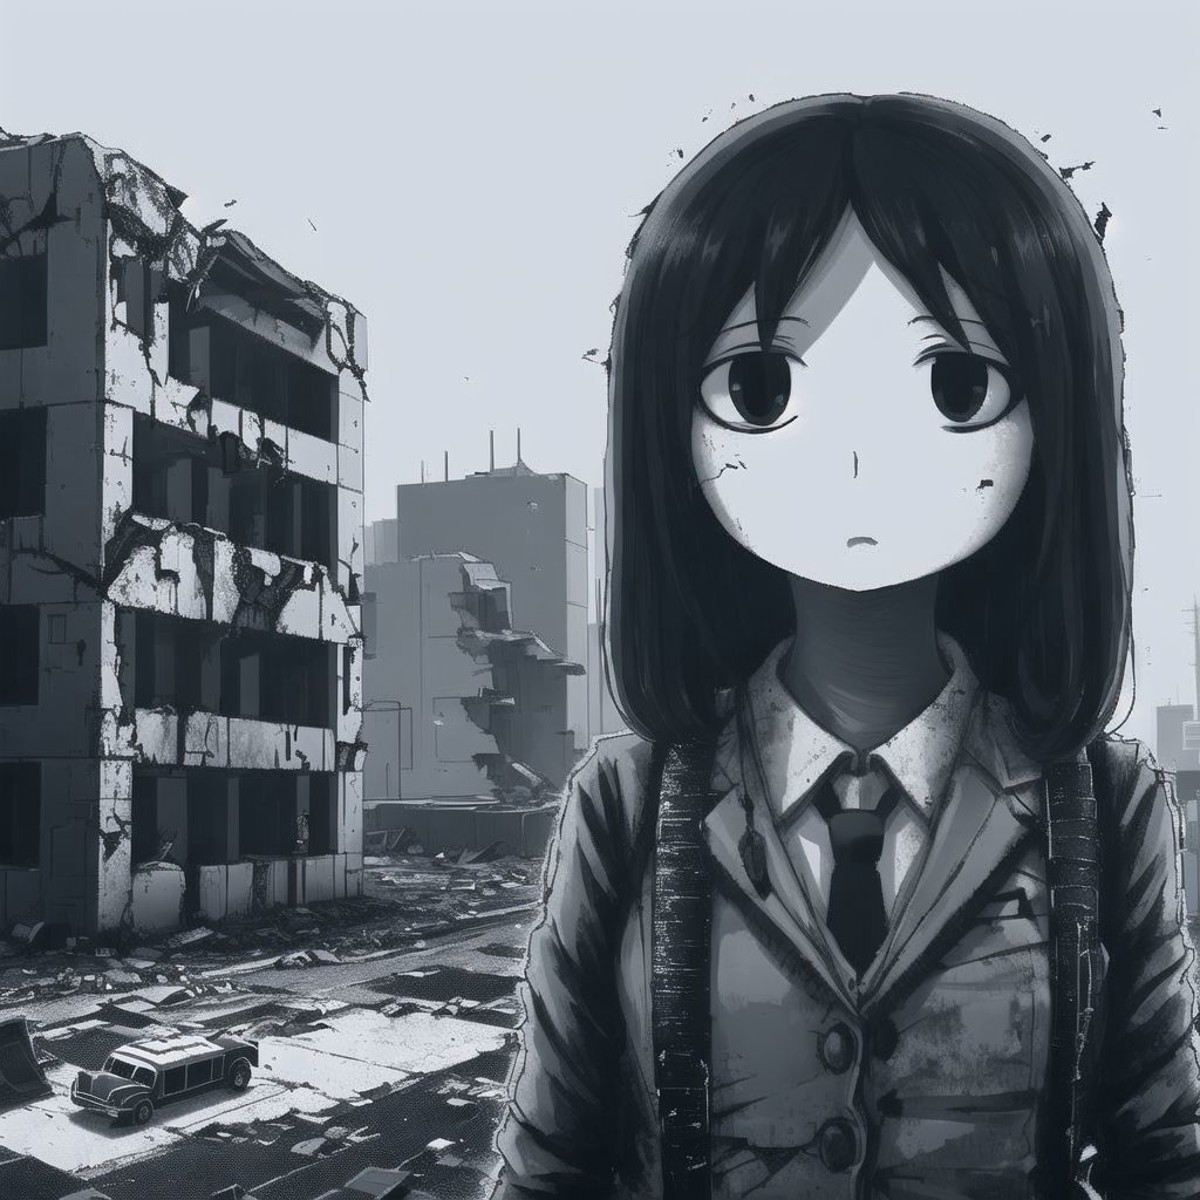 <lora:ham_rifl:0.9>, monochrome, 

expressionless, empty eyes, post-apocalypse, crumbling city on background, portrait